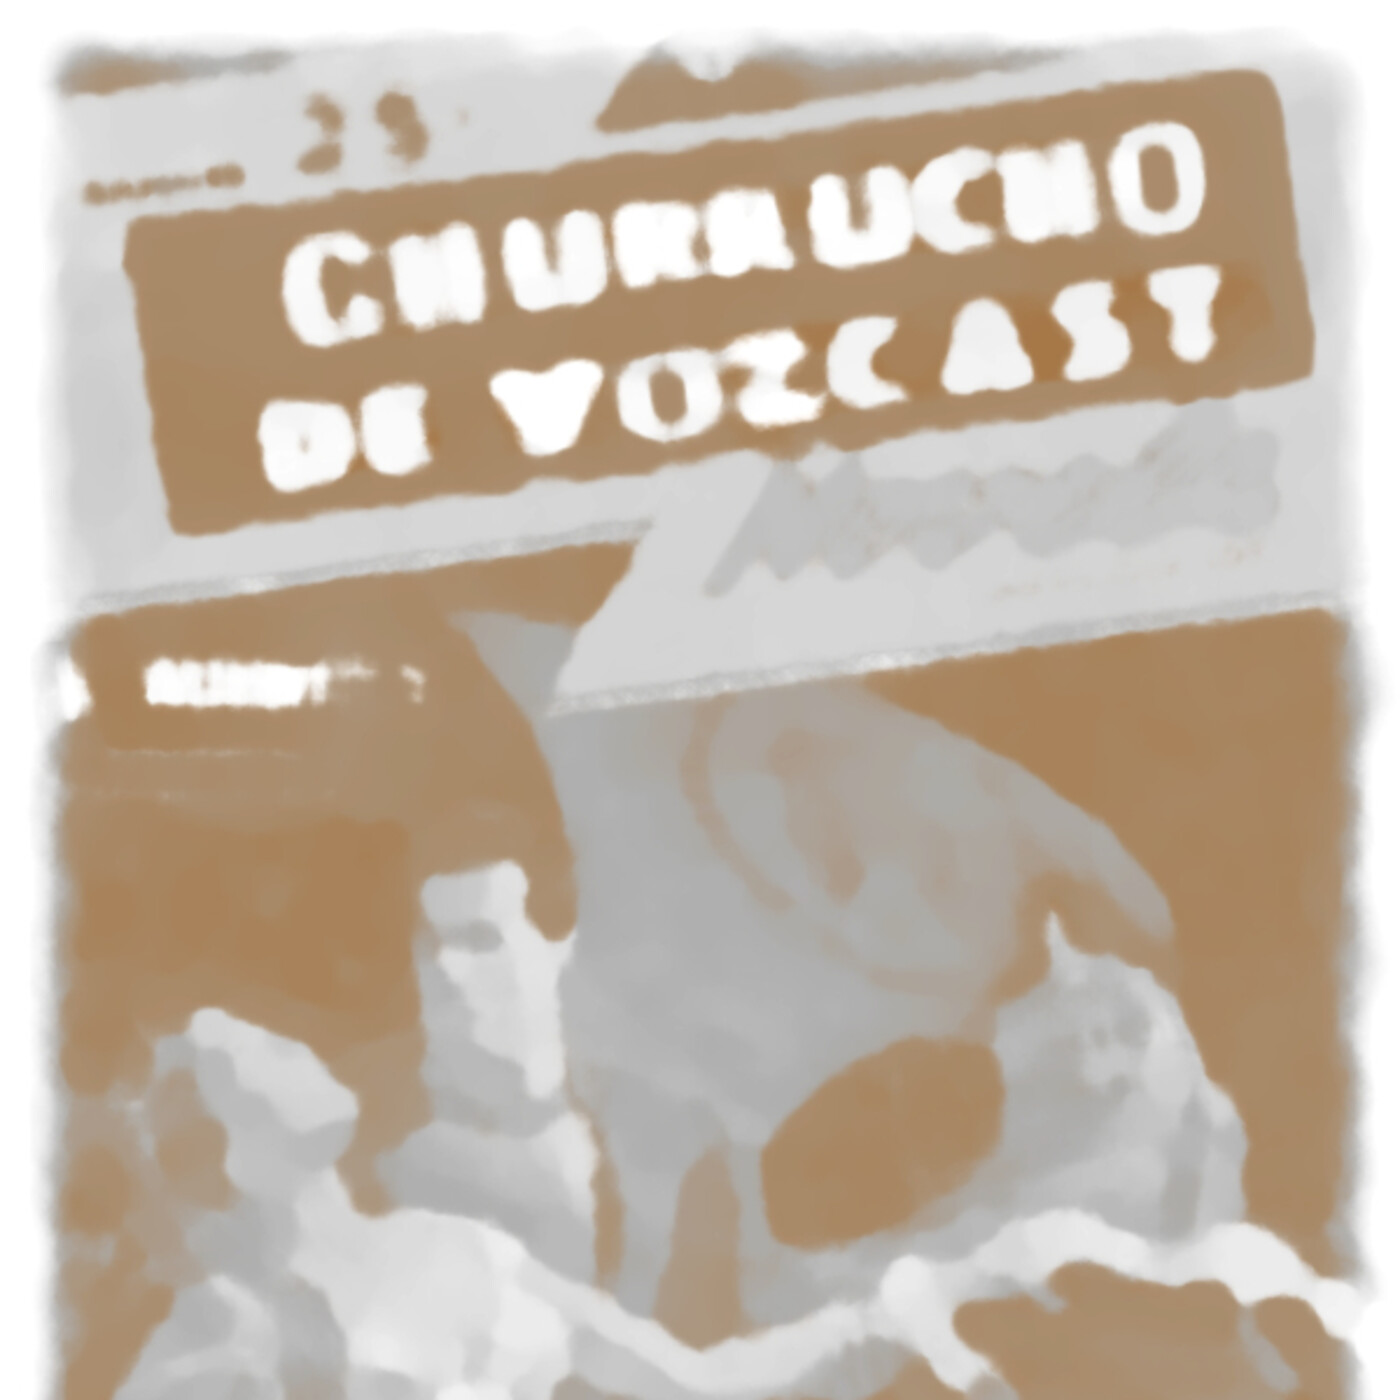 Gurrucho de Vozcast